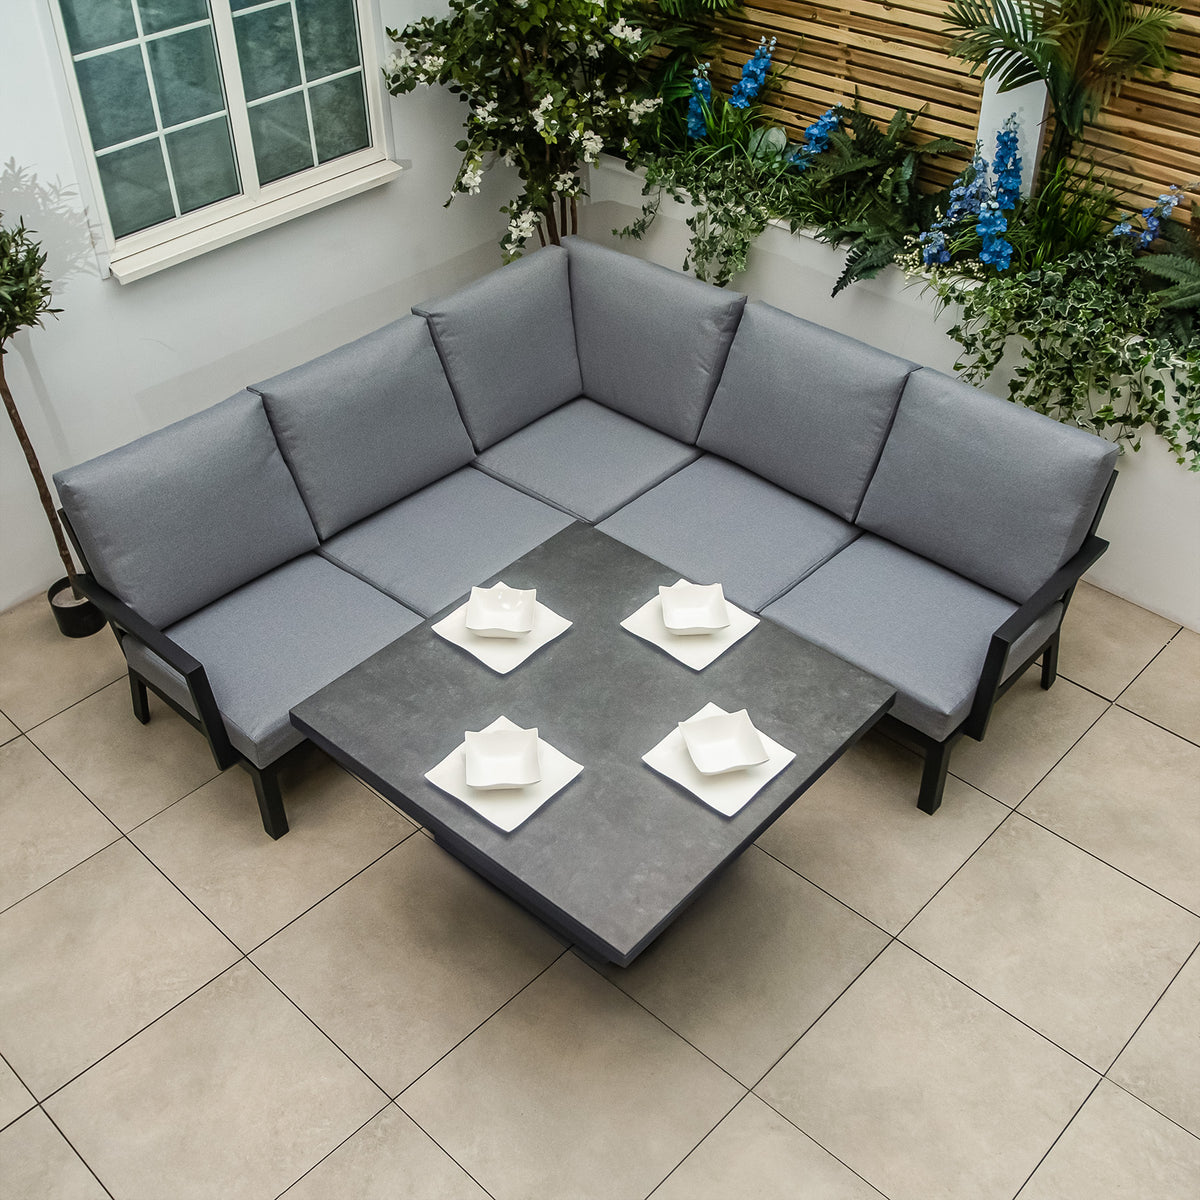 Bracken Outdoors Miami Dark Aluminium Compact Corner Set with Adjustable Table